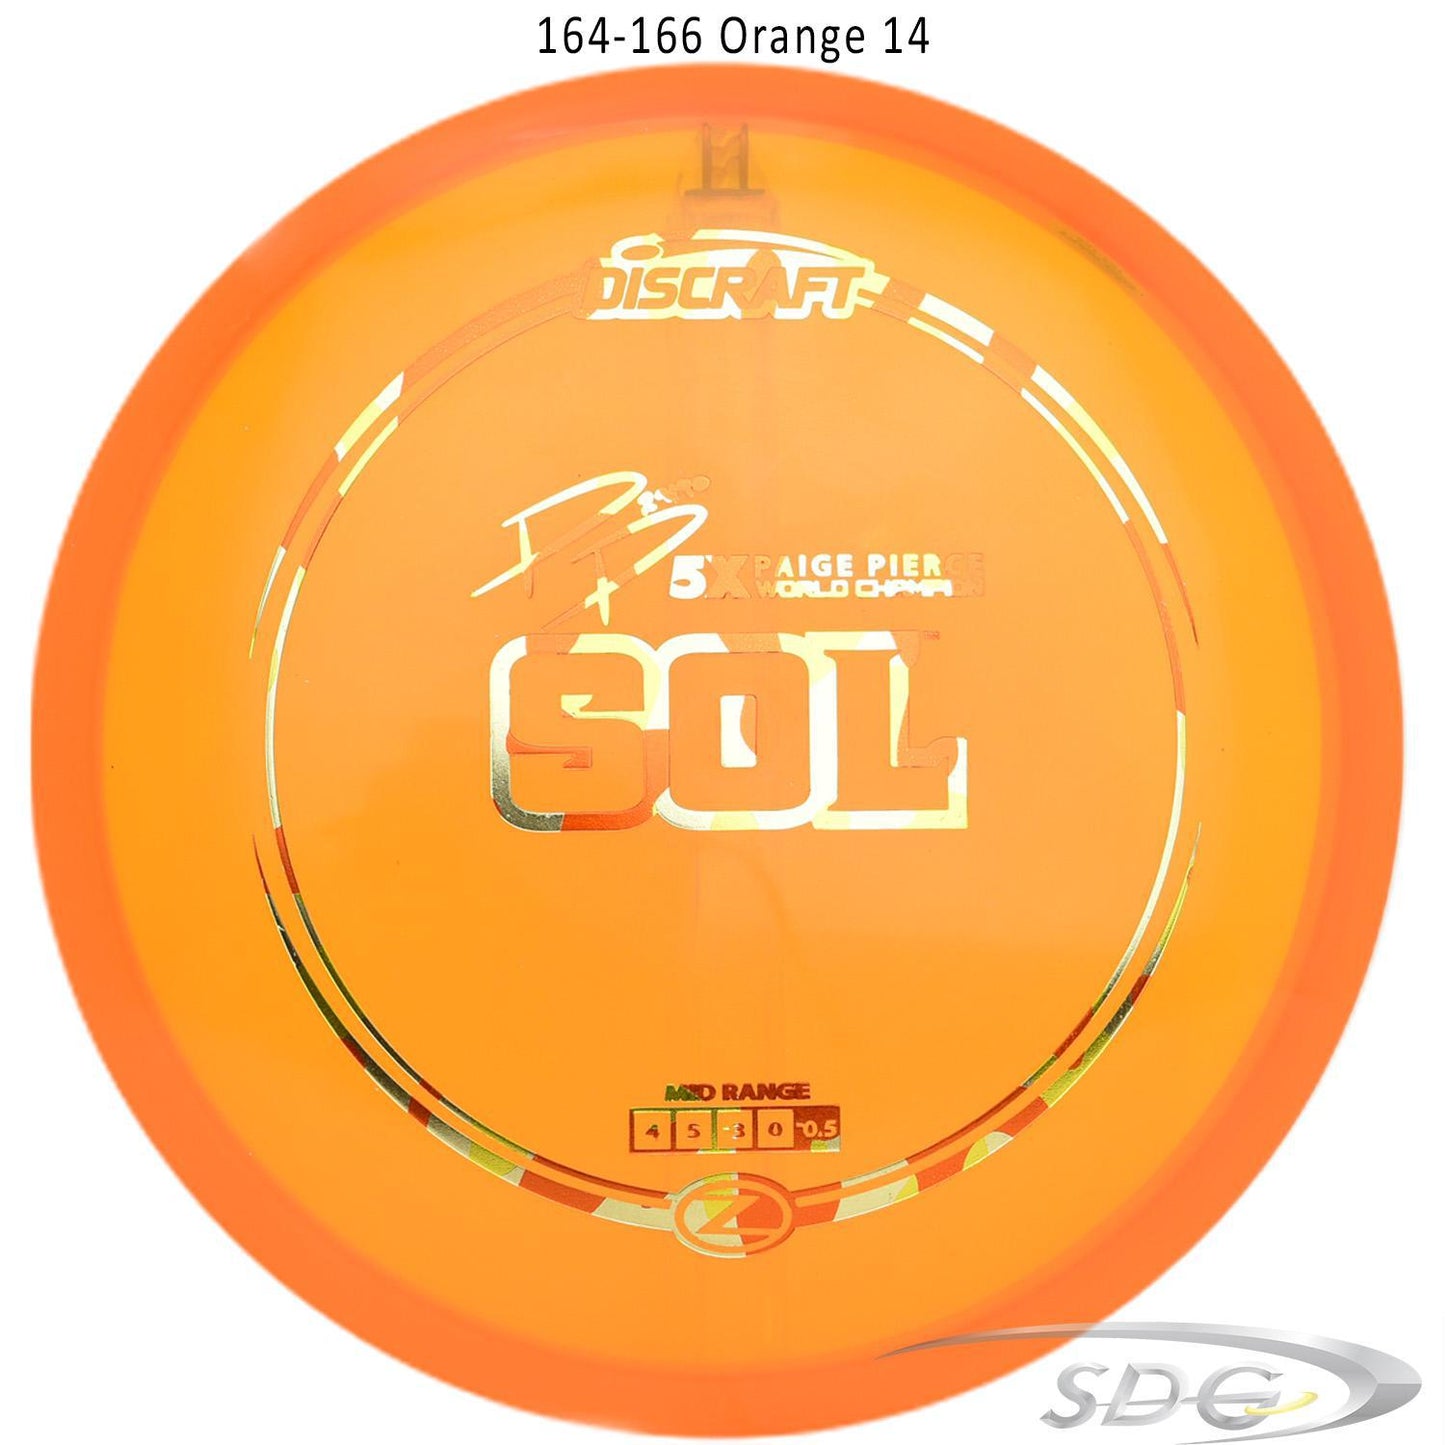 discraft-z-line-sol-paige-pierce-signature-disc-golf-mid-range 164-166 Orange 14